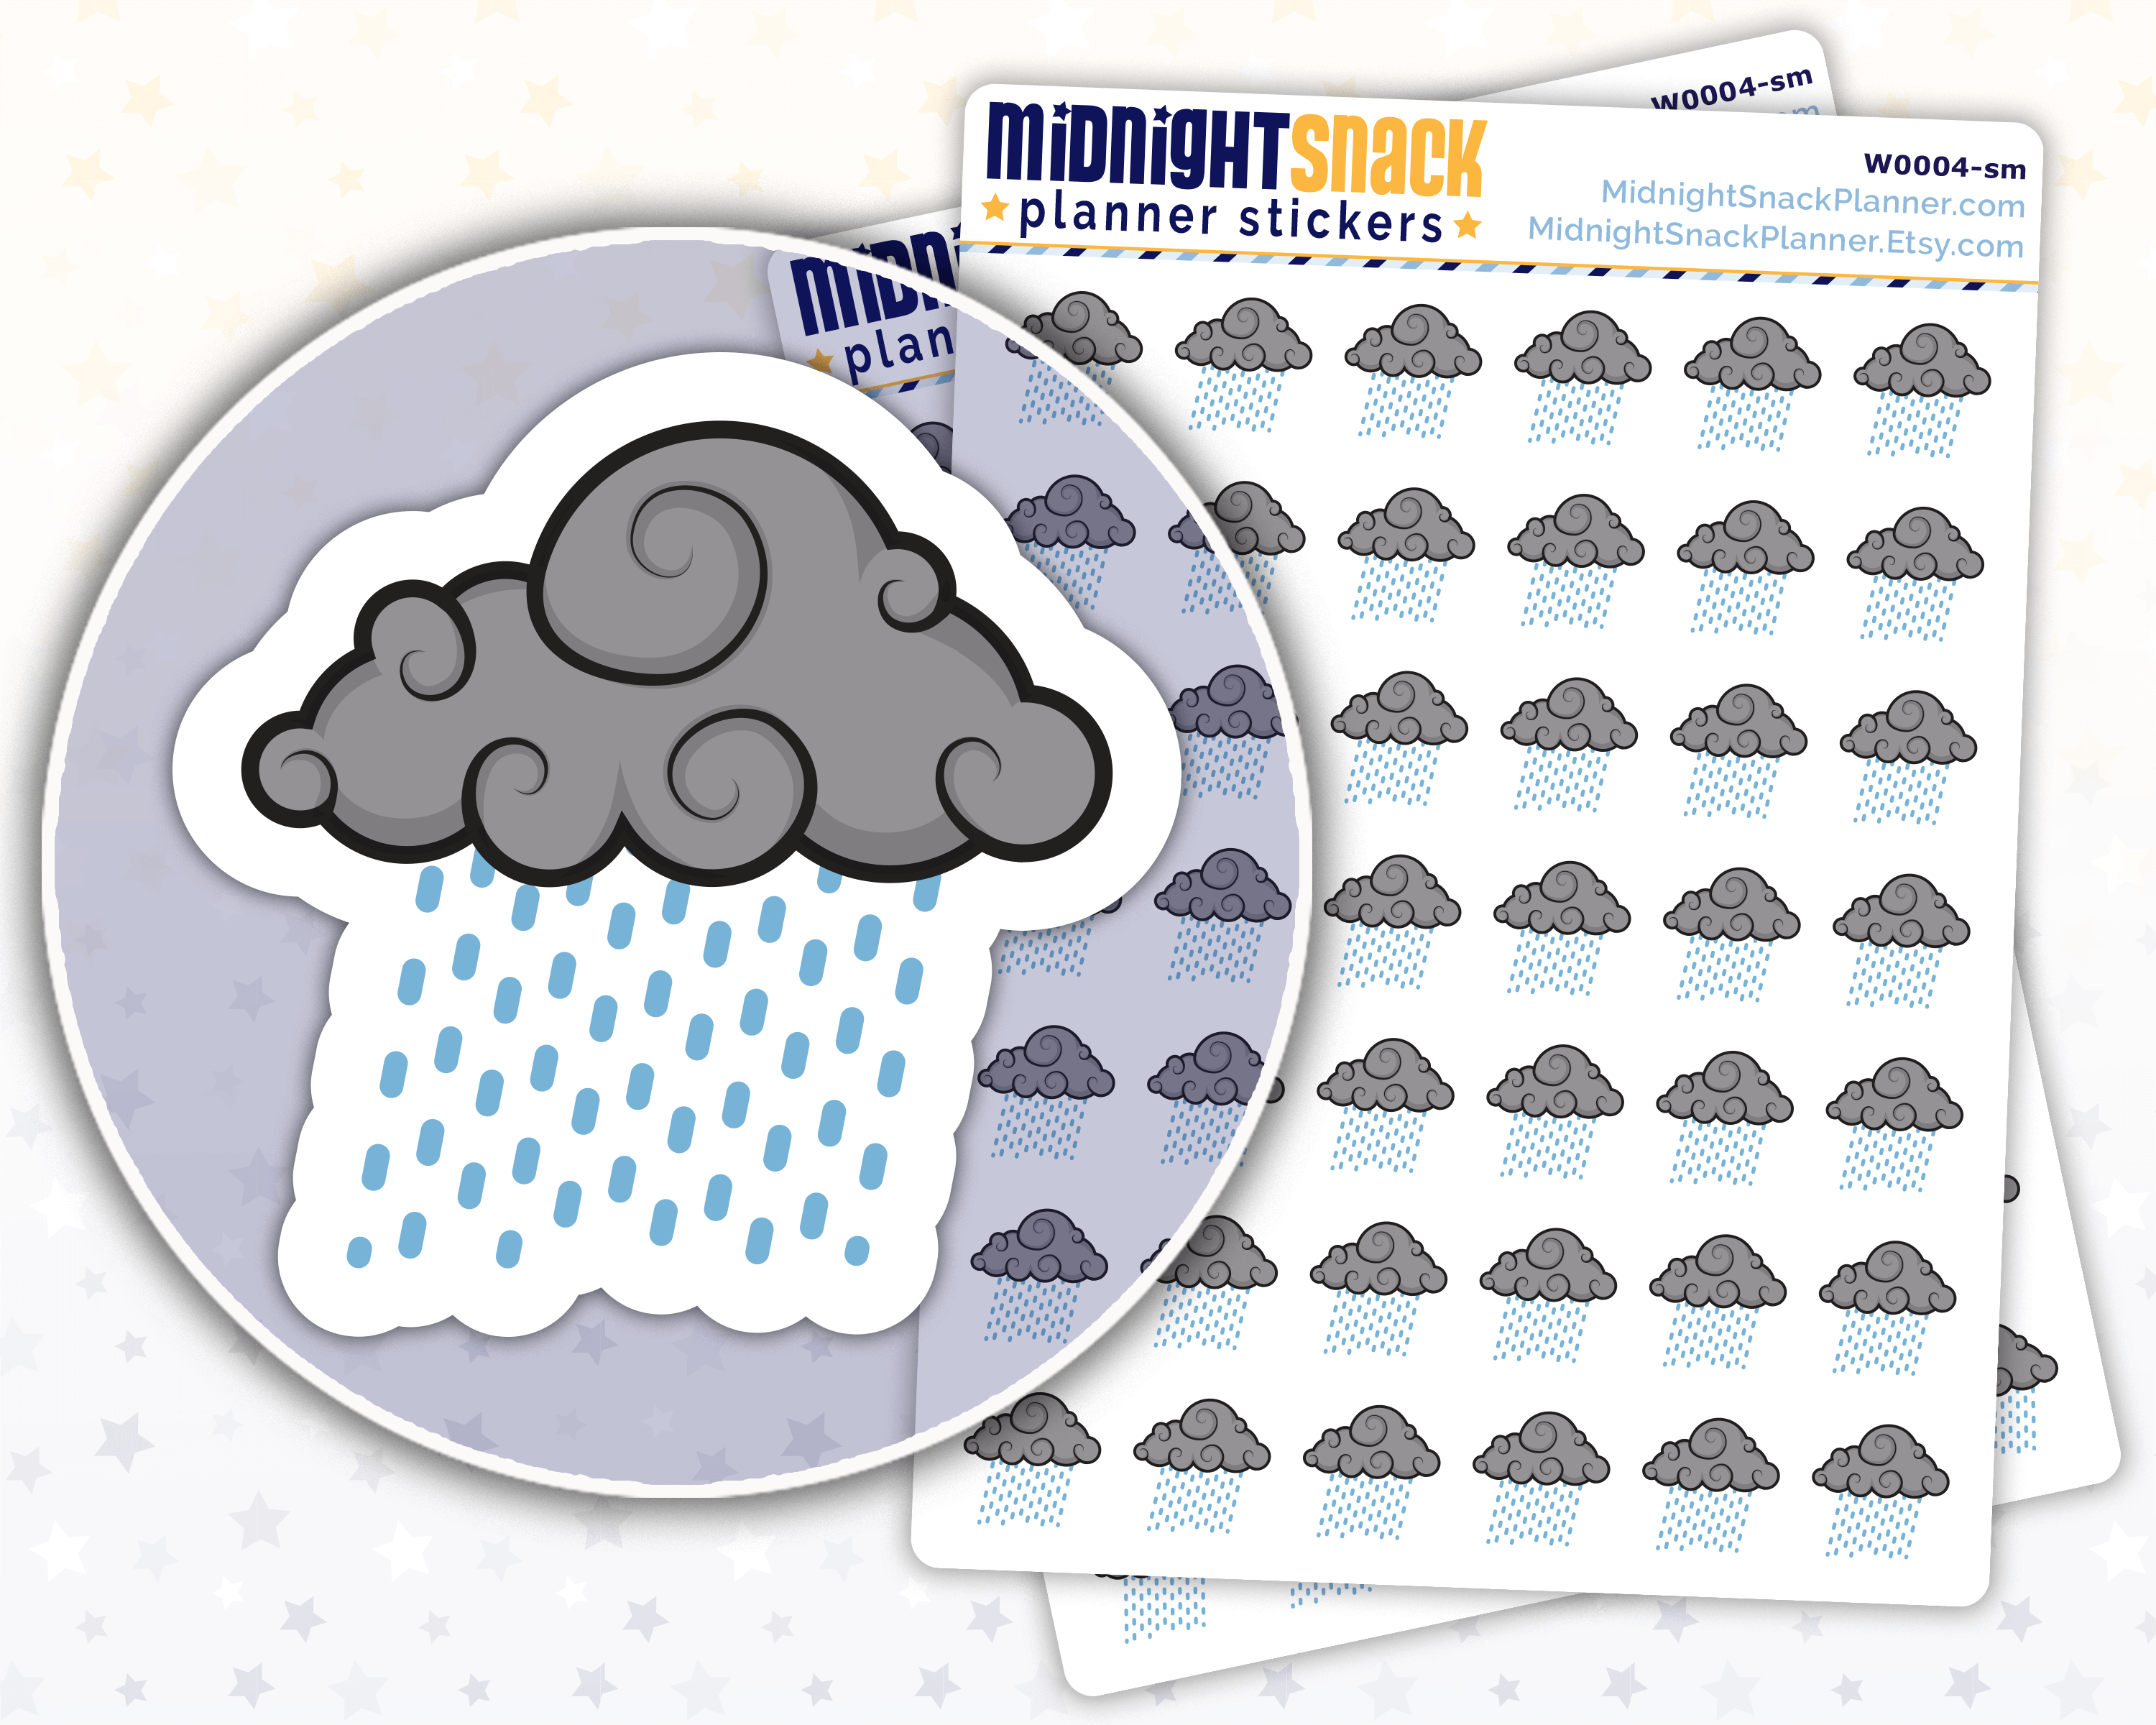 Dark Clouds and Rain Icon: Weather Planner Stickers Midnight Snack Planner